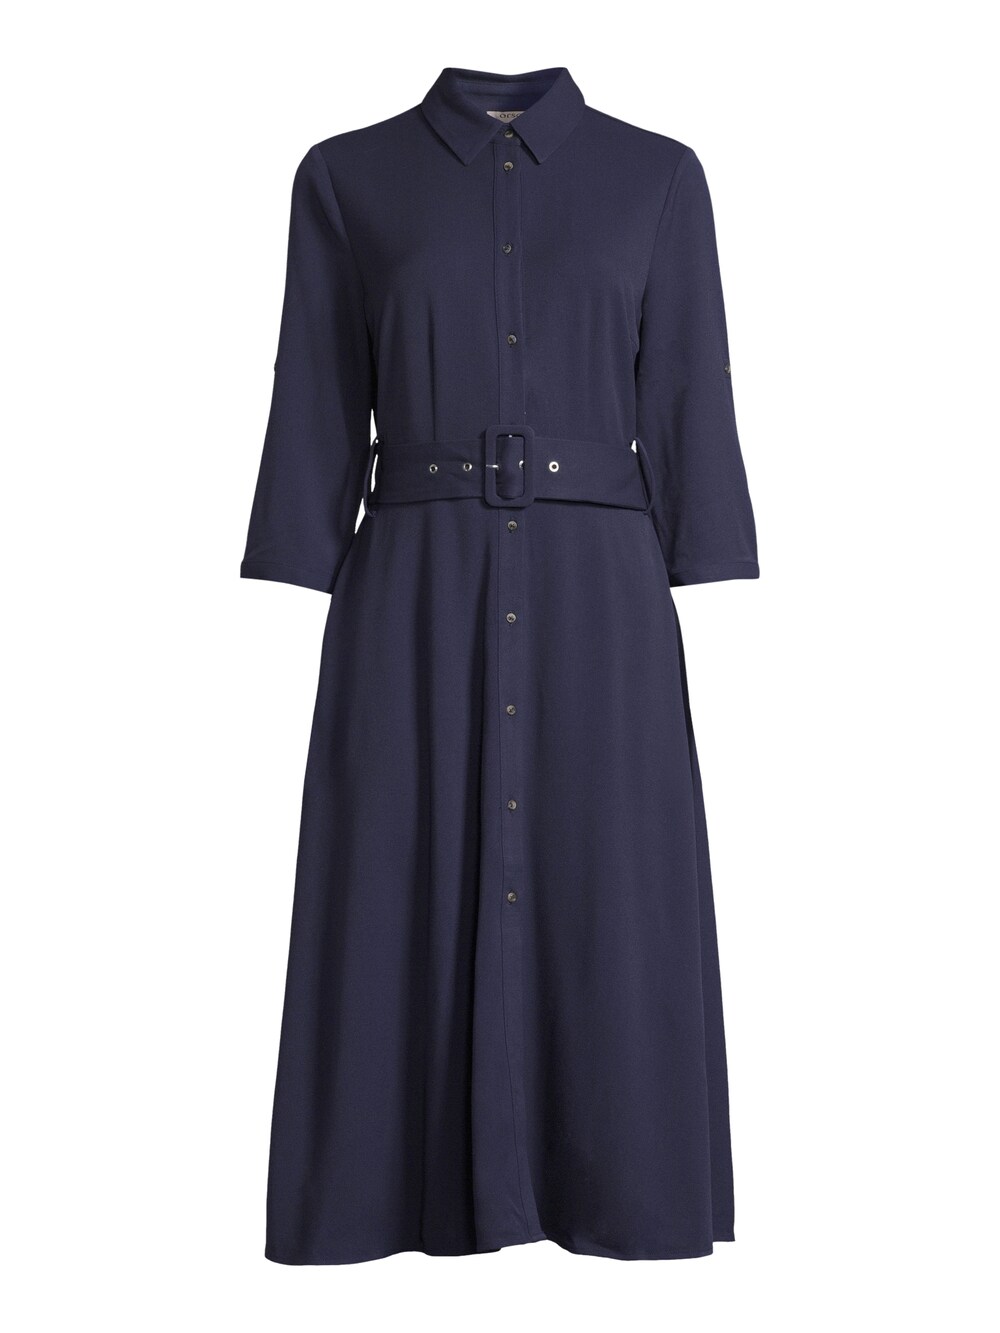 Рубашка-платье Orsay Florence, темно-синий